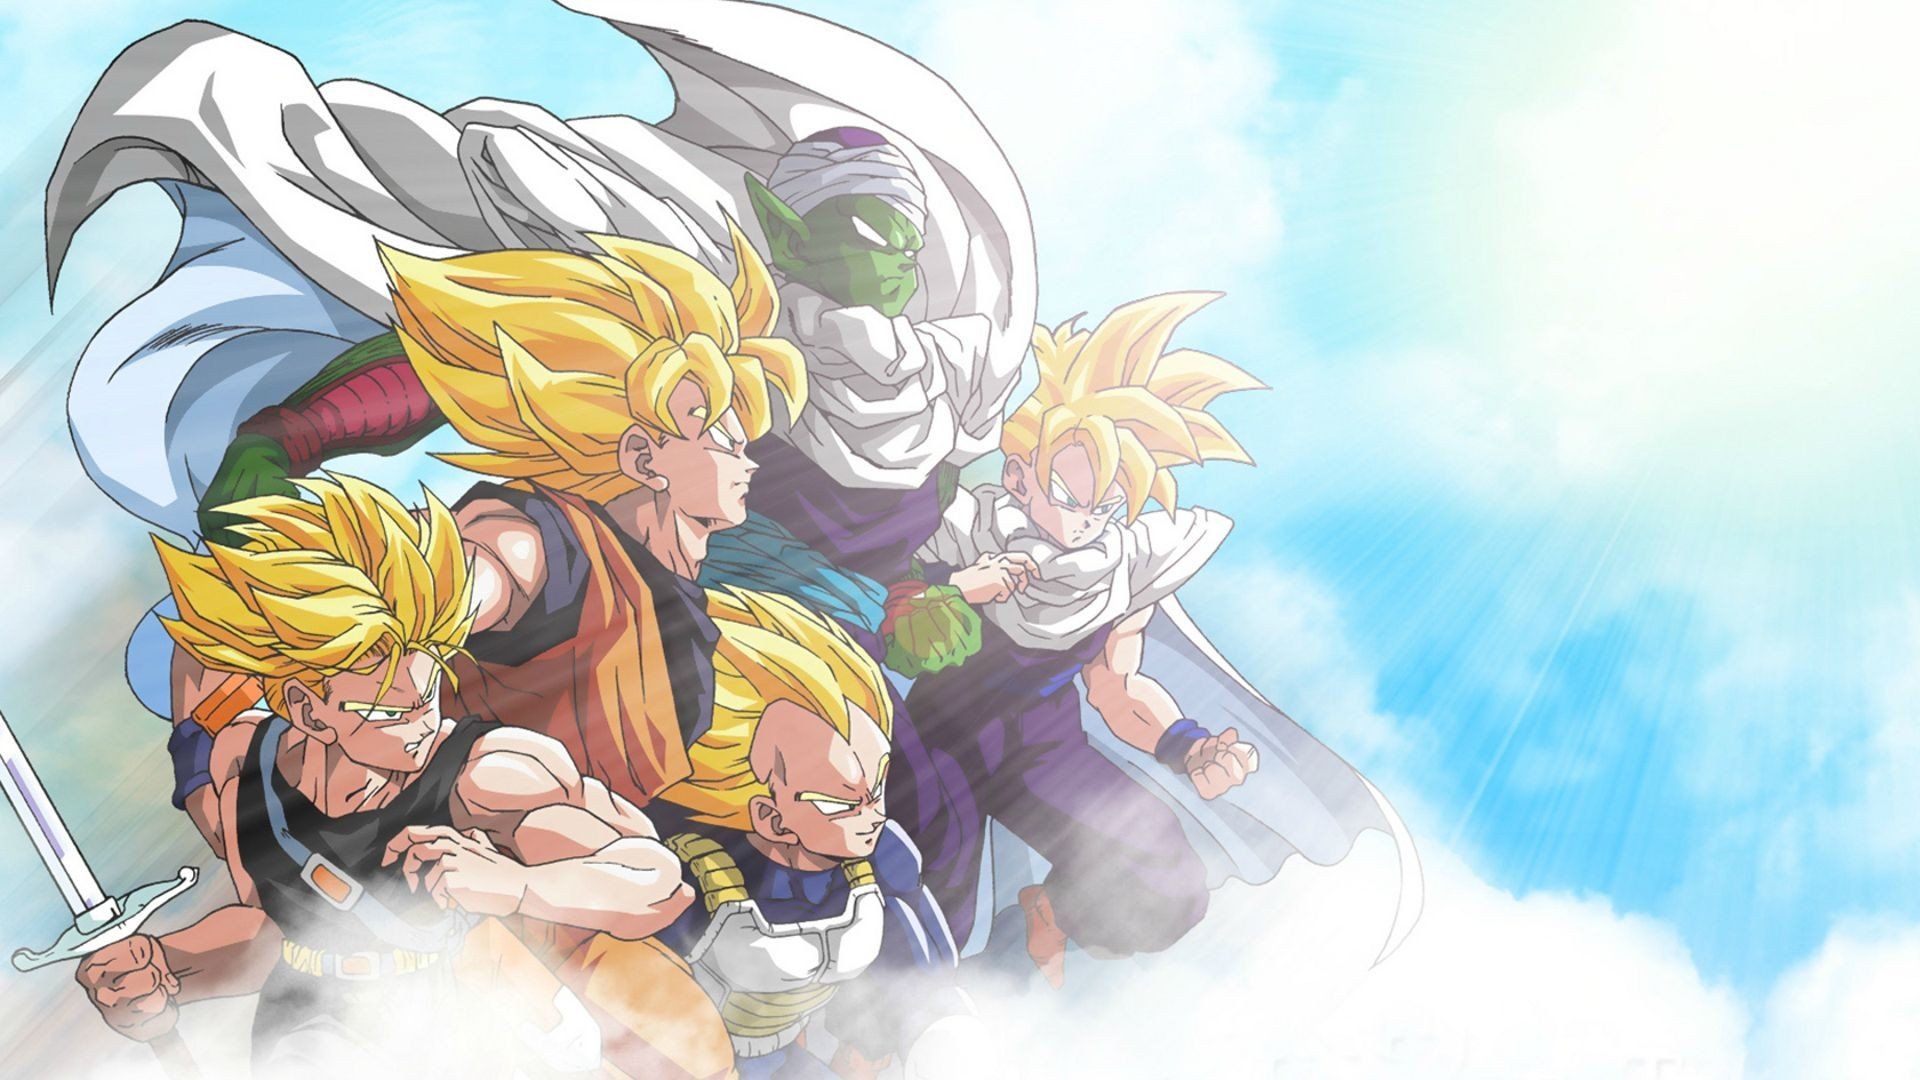 Dragon Ball Z, Son Goku, Piccolo, Gohan, Vegeta, Trunks character